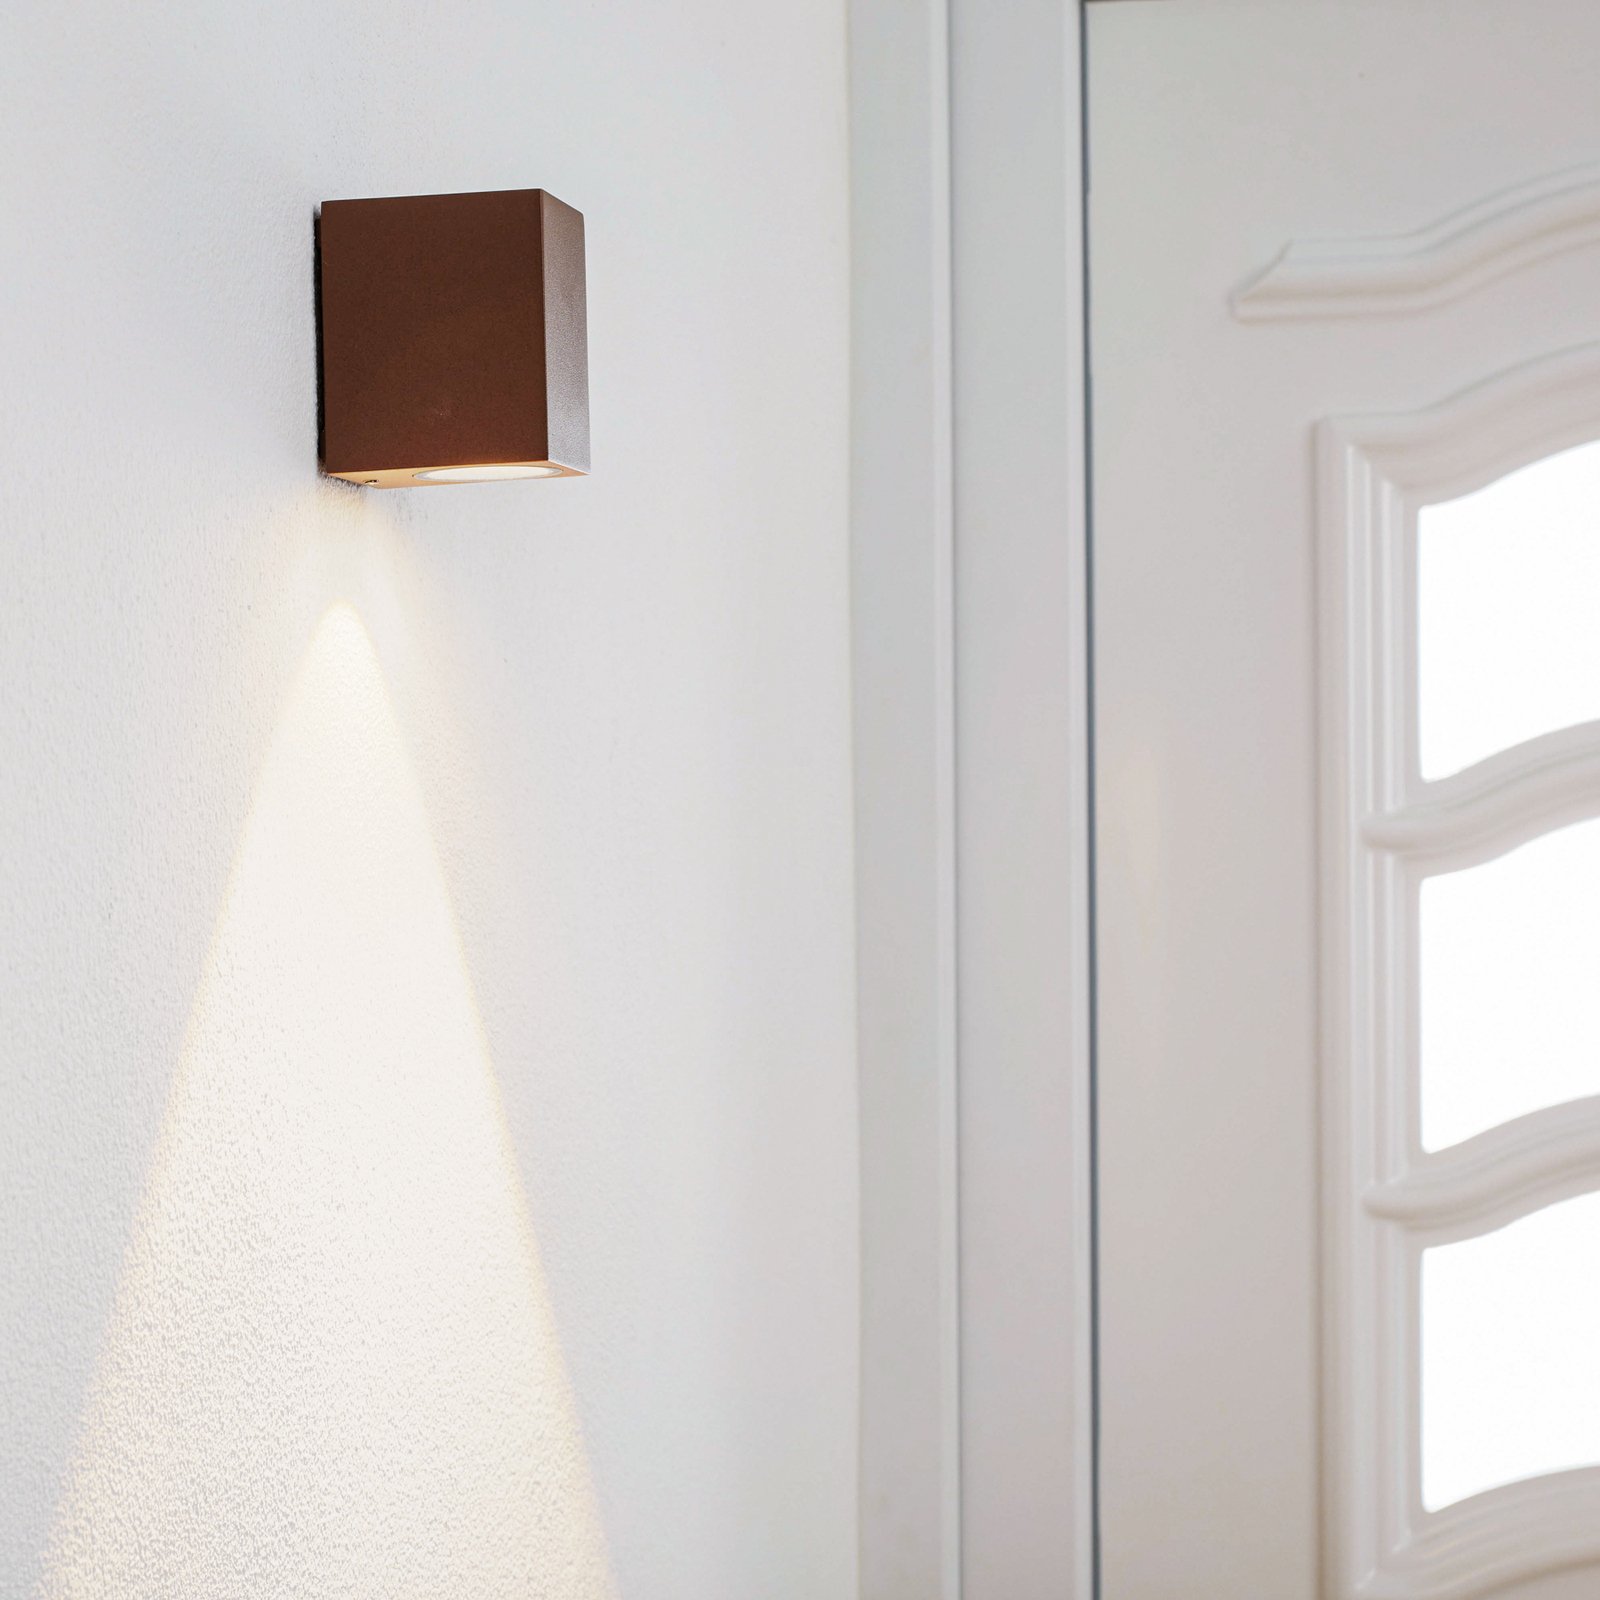 Rusty-brown LED outdoor wall light Tavi, 9.5 cm